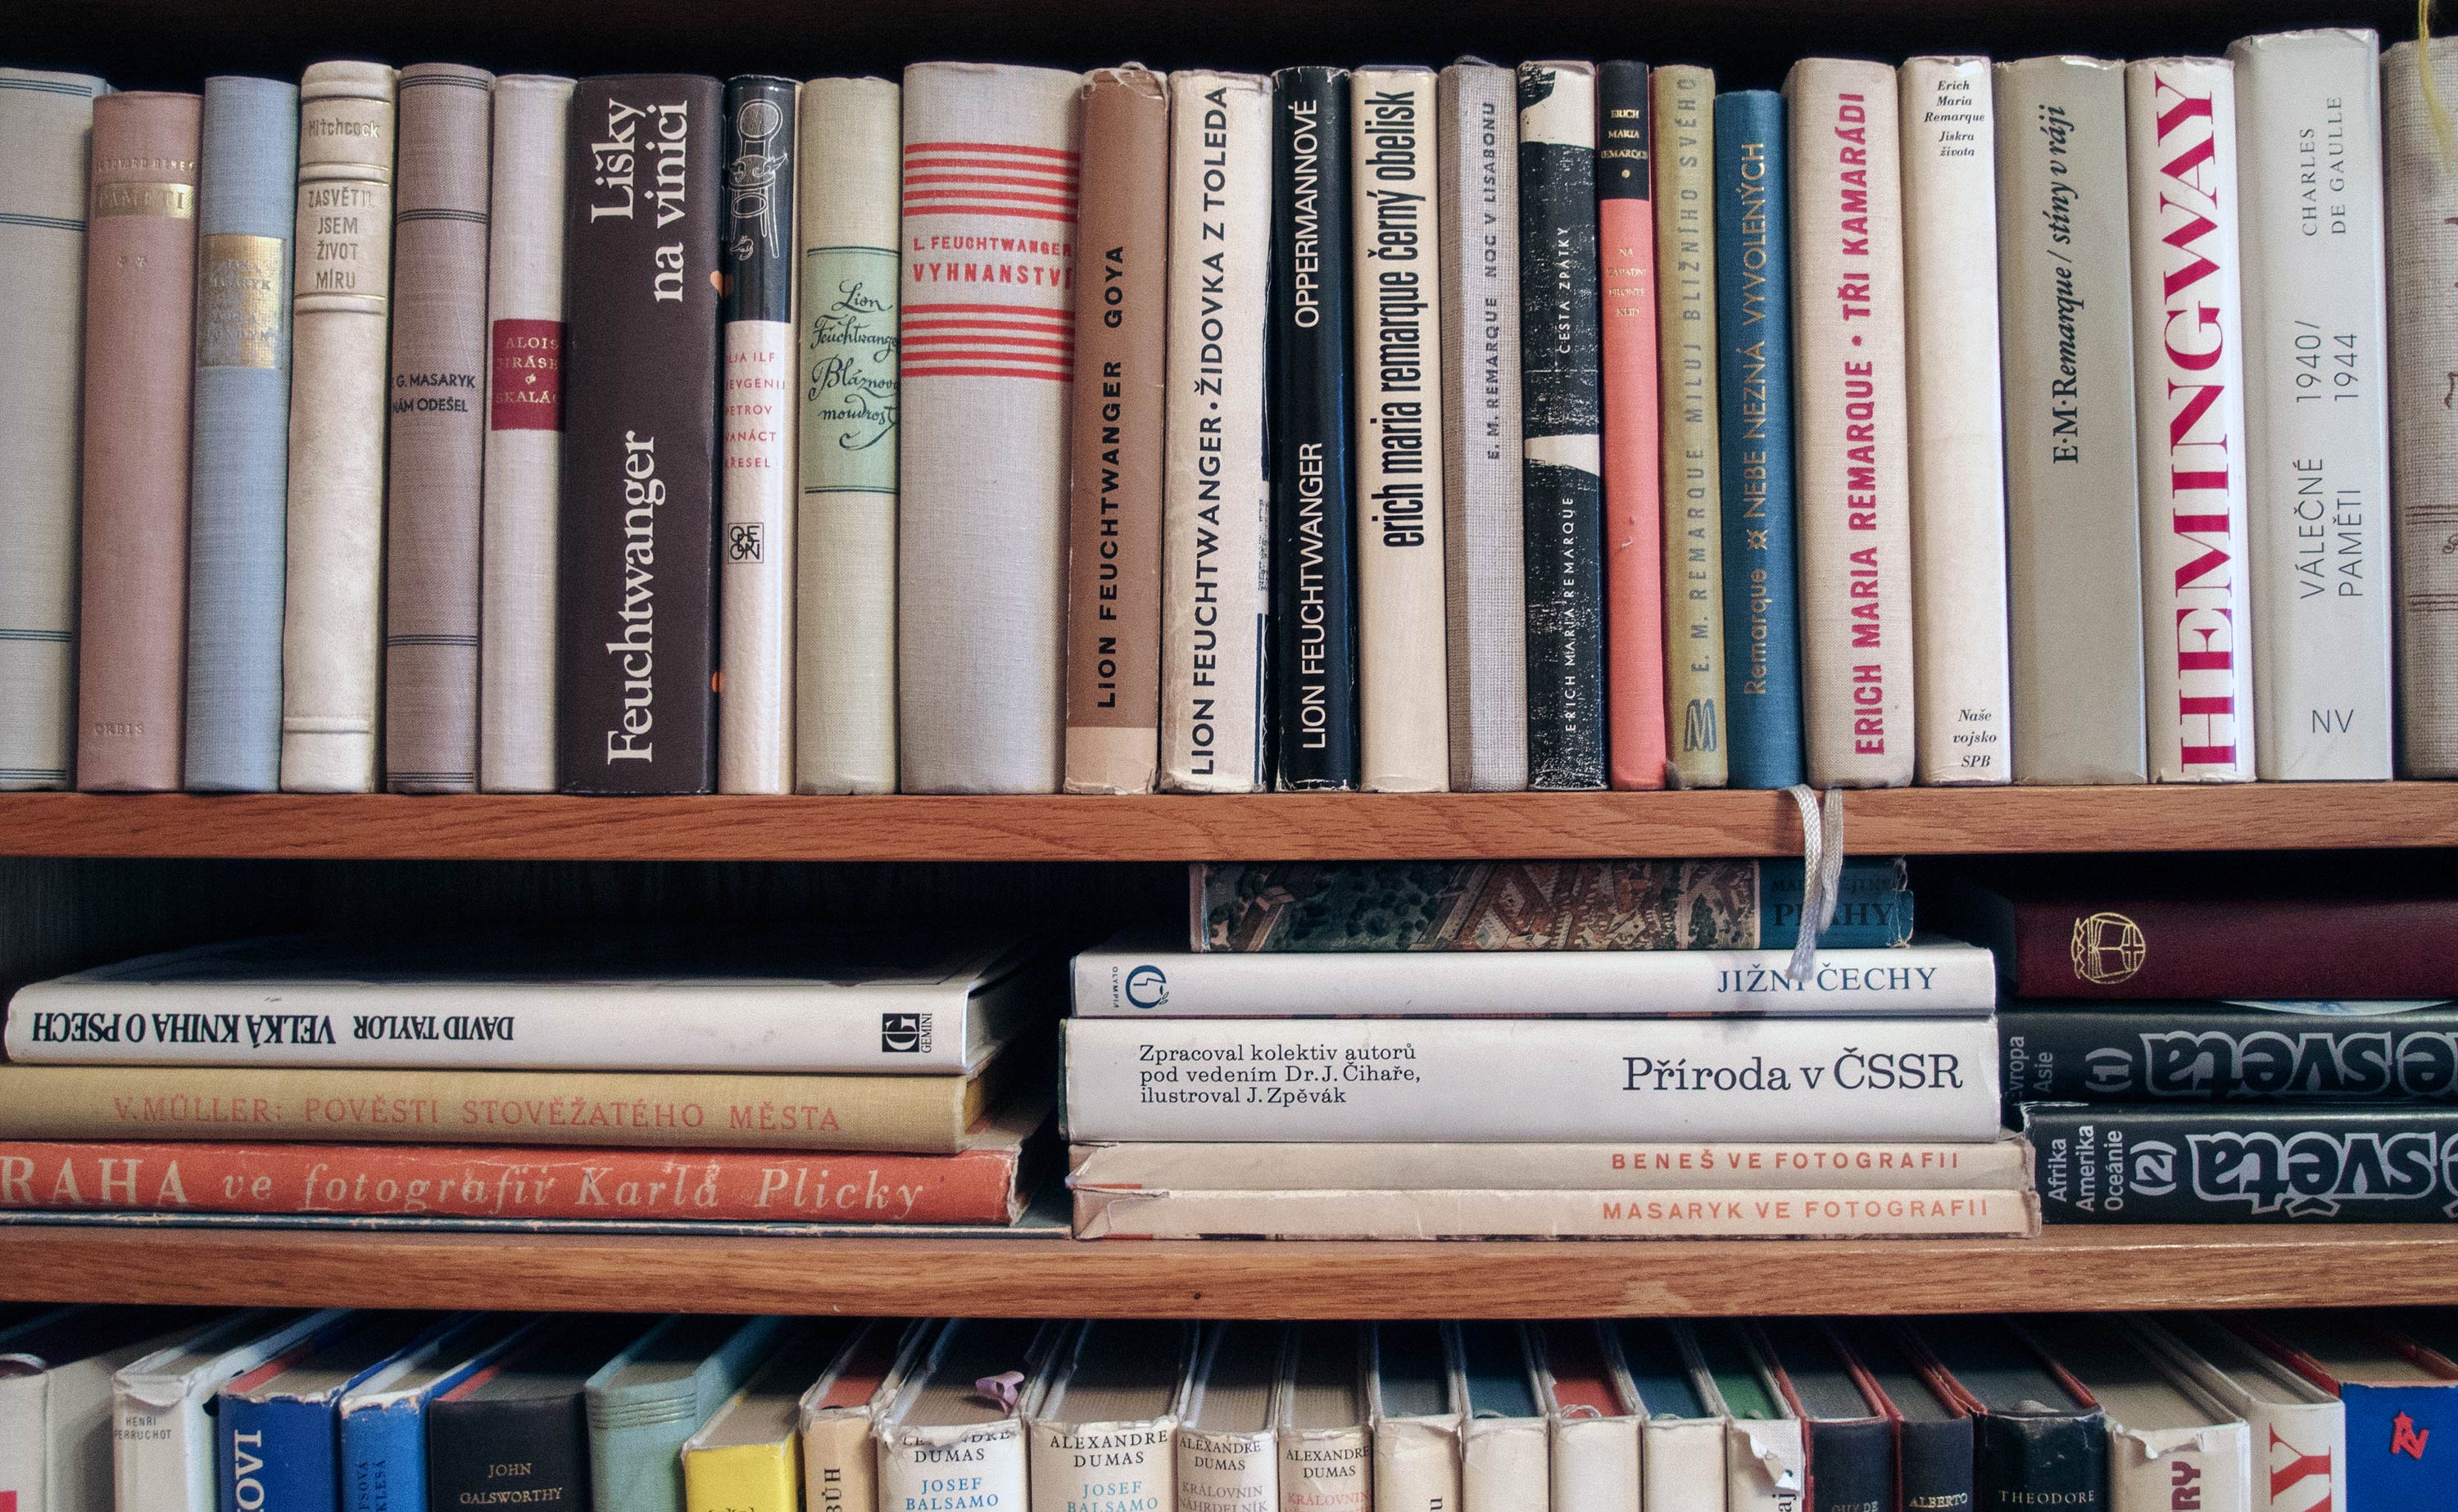 How To Segment Individiual Books In An Image Of A Bookshelf